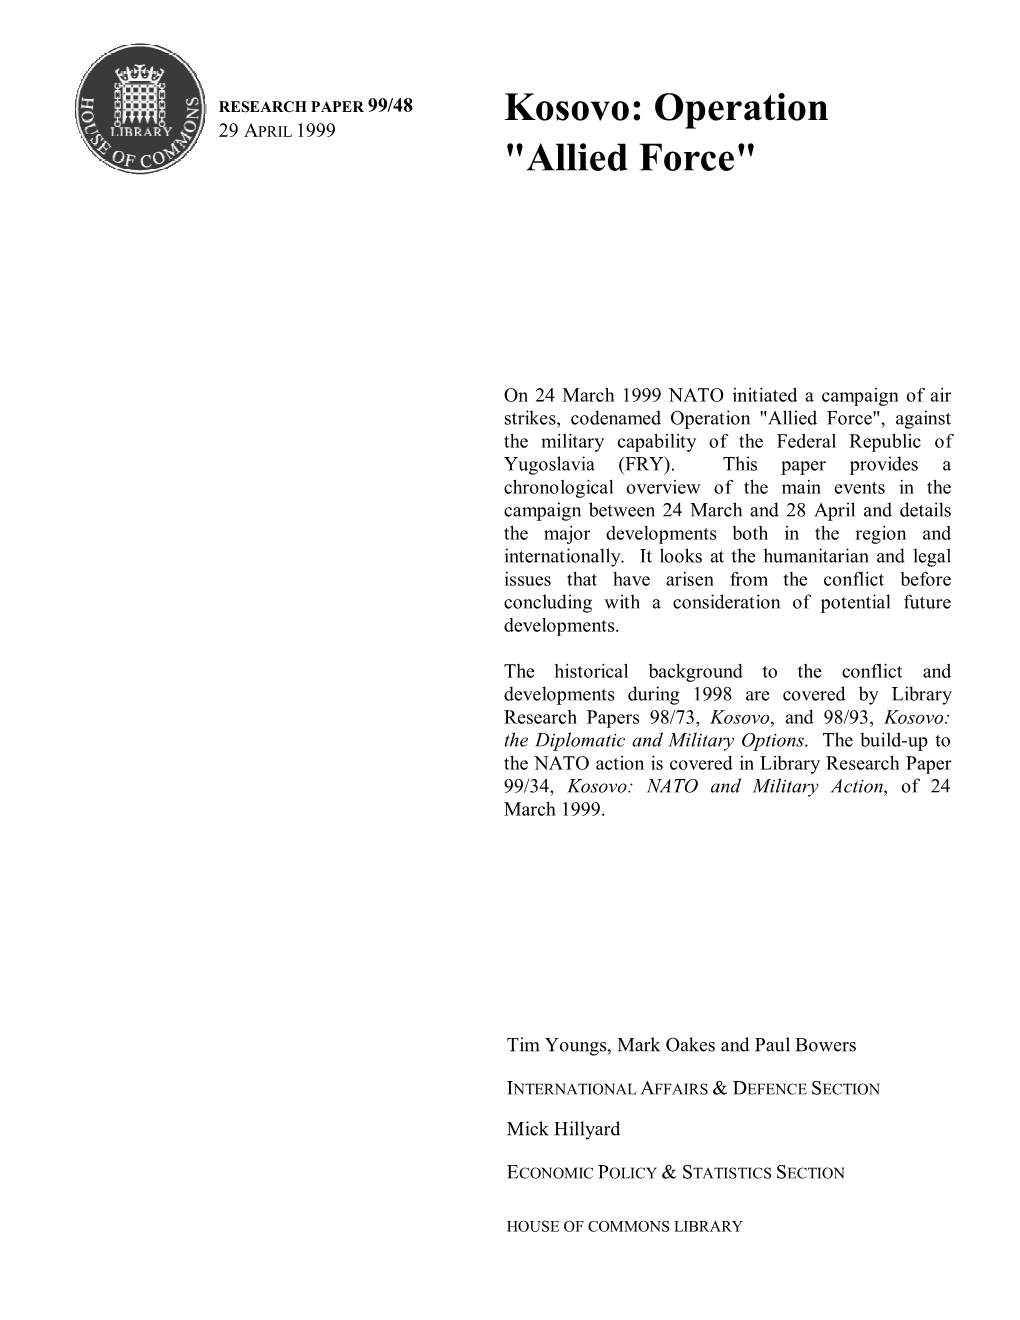 Kosovo: Operation "Allied Force"